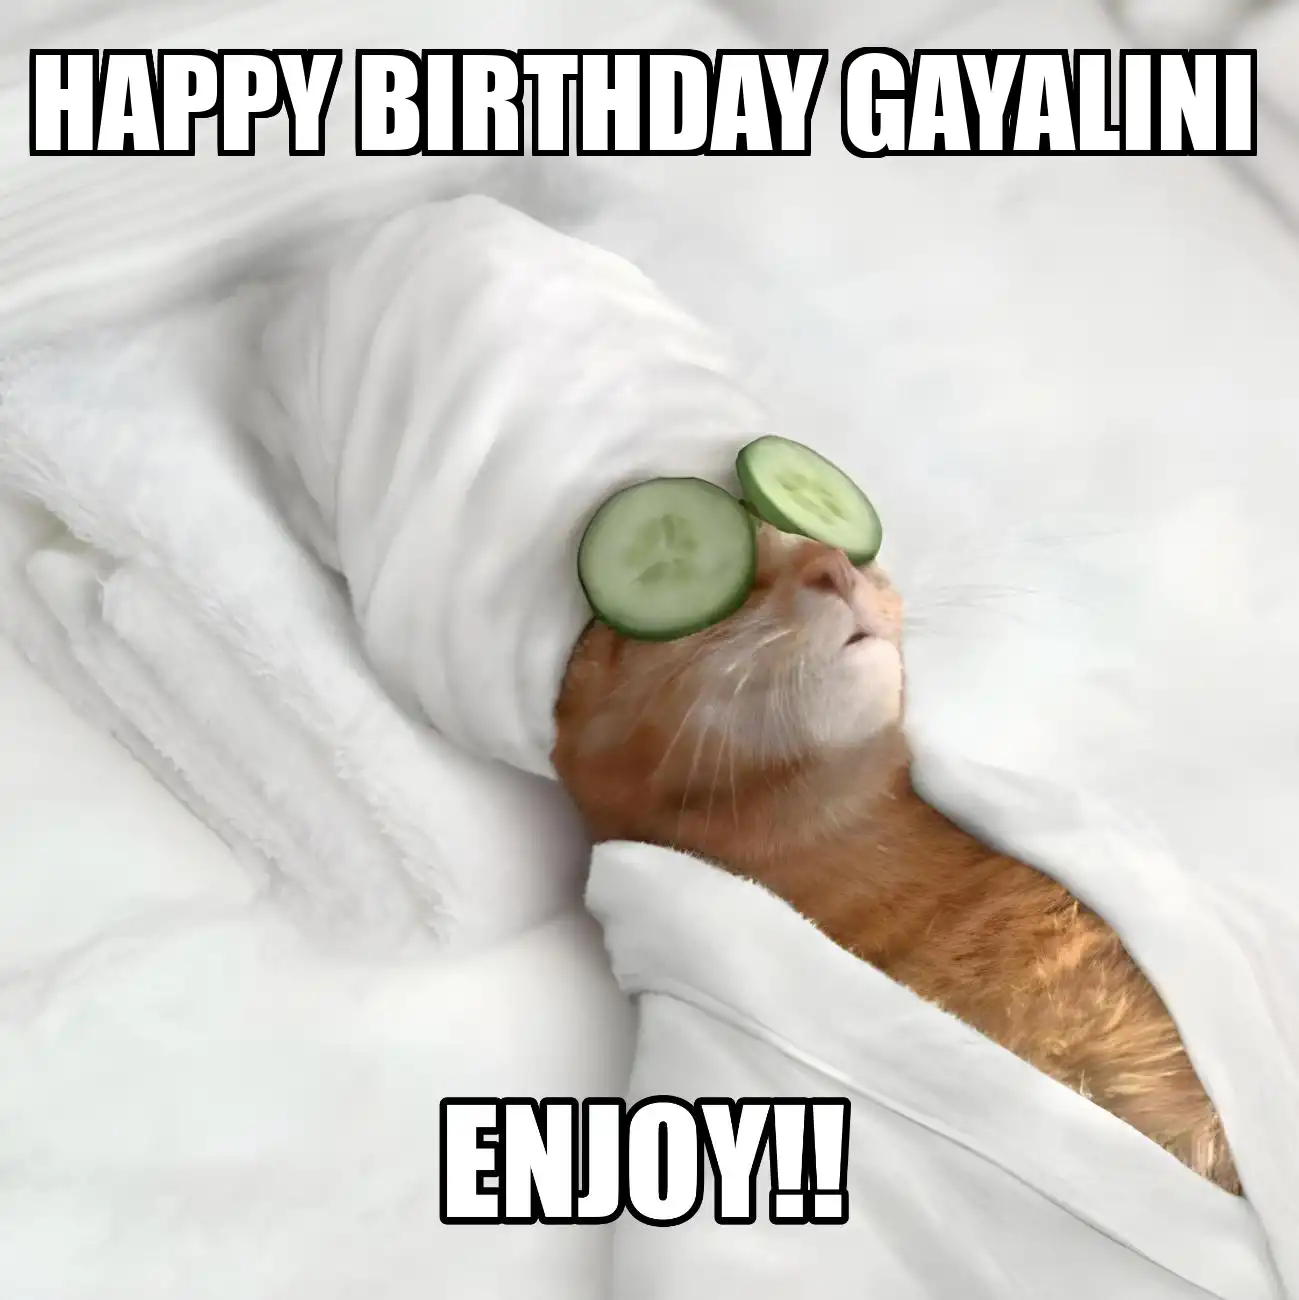 Happy Birthday Gayalini Enjoy Cat Meme